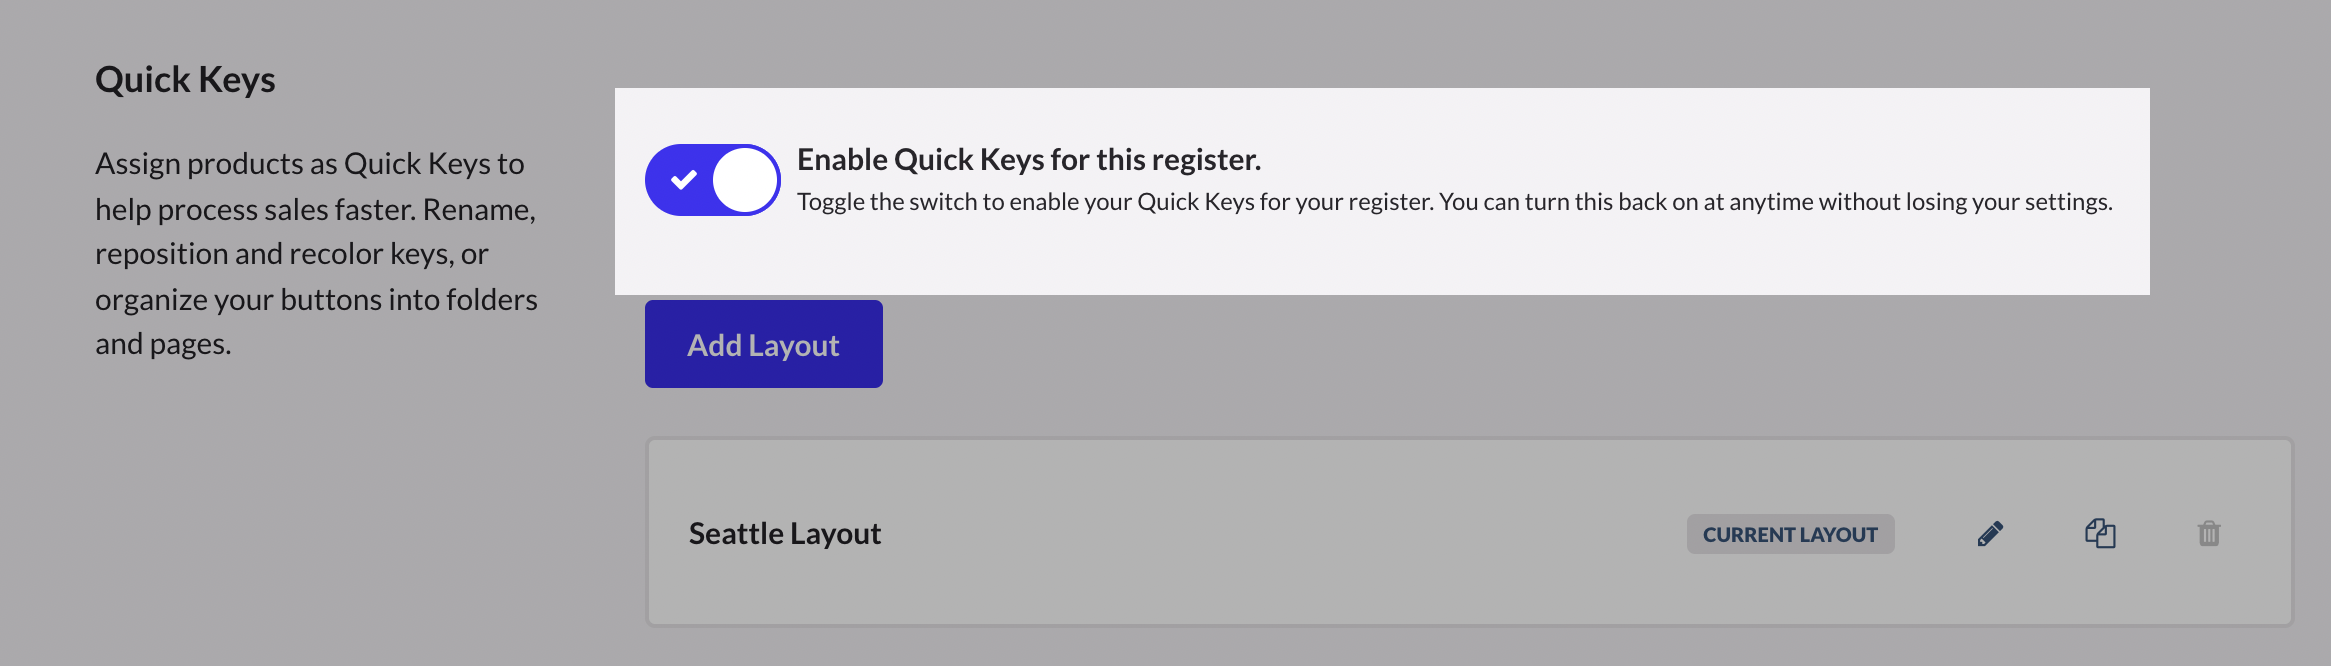 Enable-Quick-Keys-For-Register.png